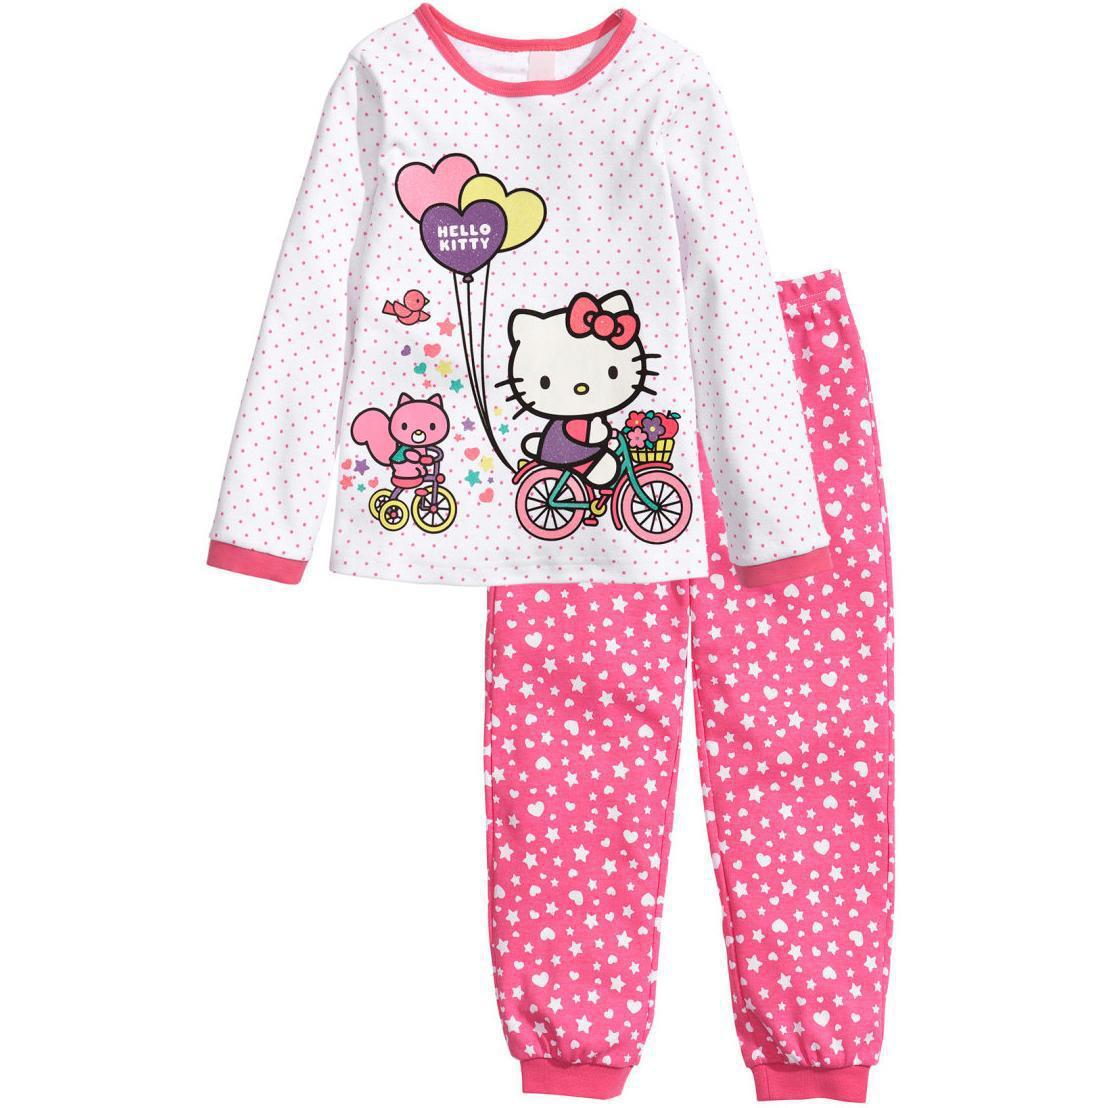 Toddler Girl 2 Pieces Pajamas Sleepwear Hello Kitty Long Sleeve Shirt ...